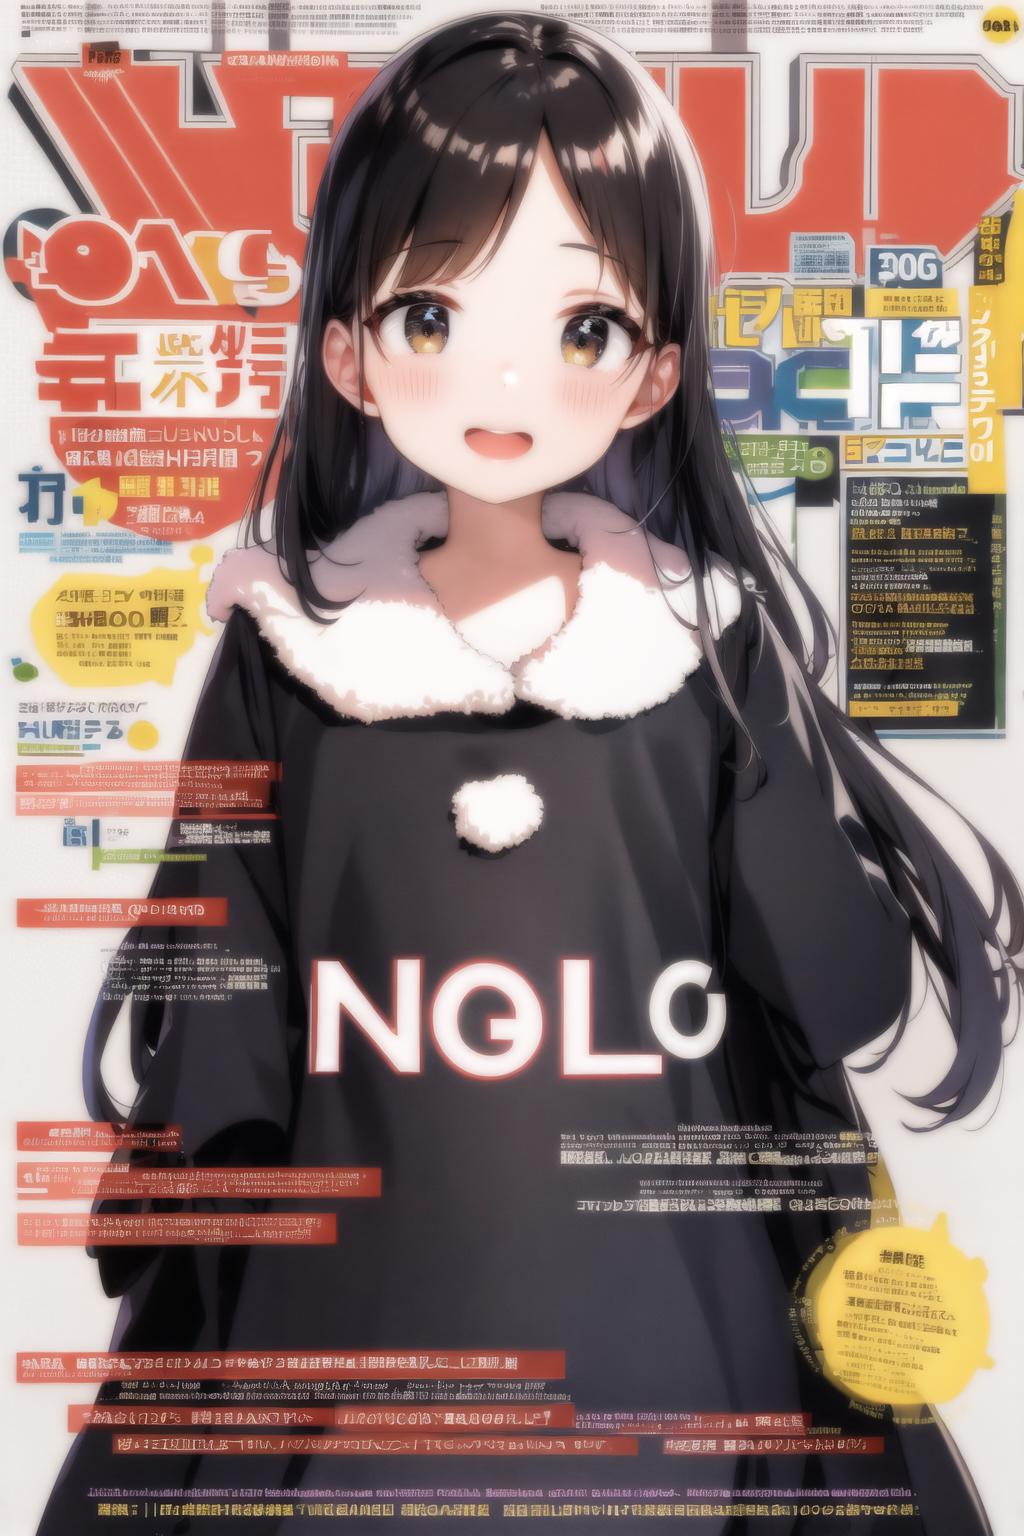 Anime : Magazine & Blog WordPress Theme #248015